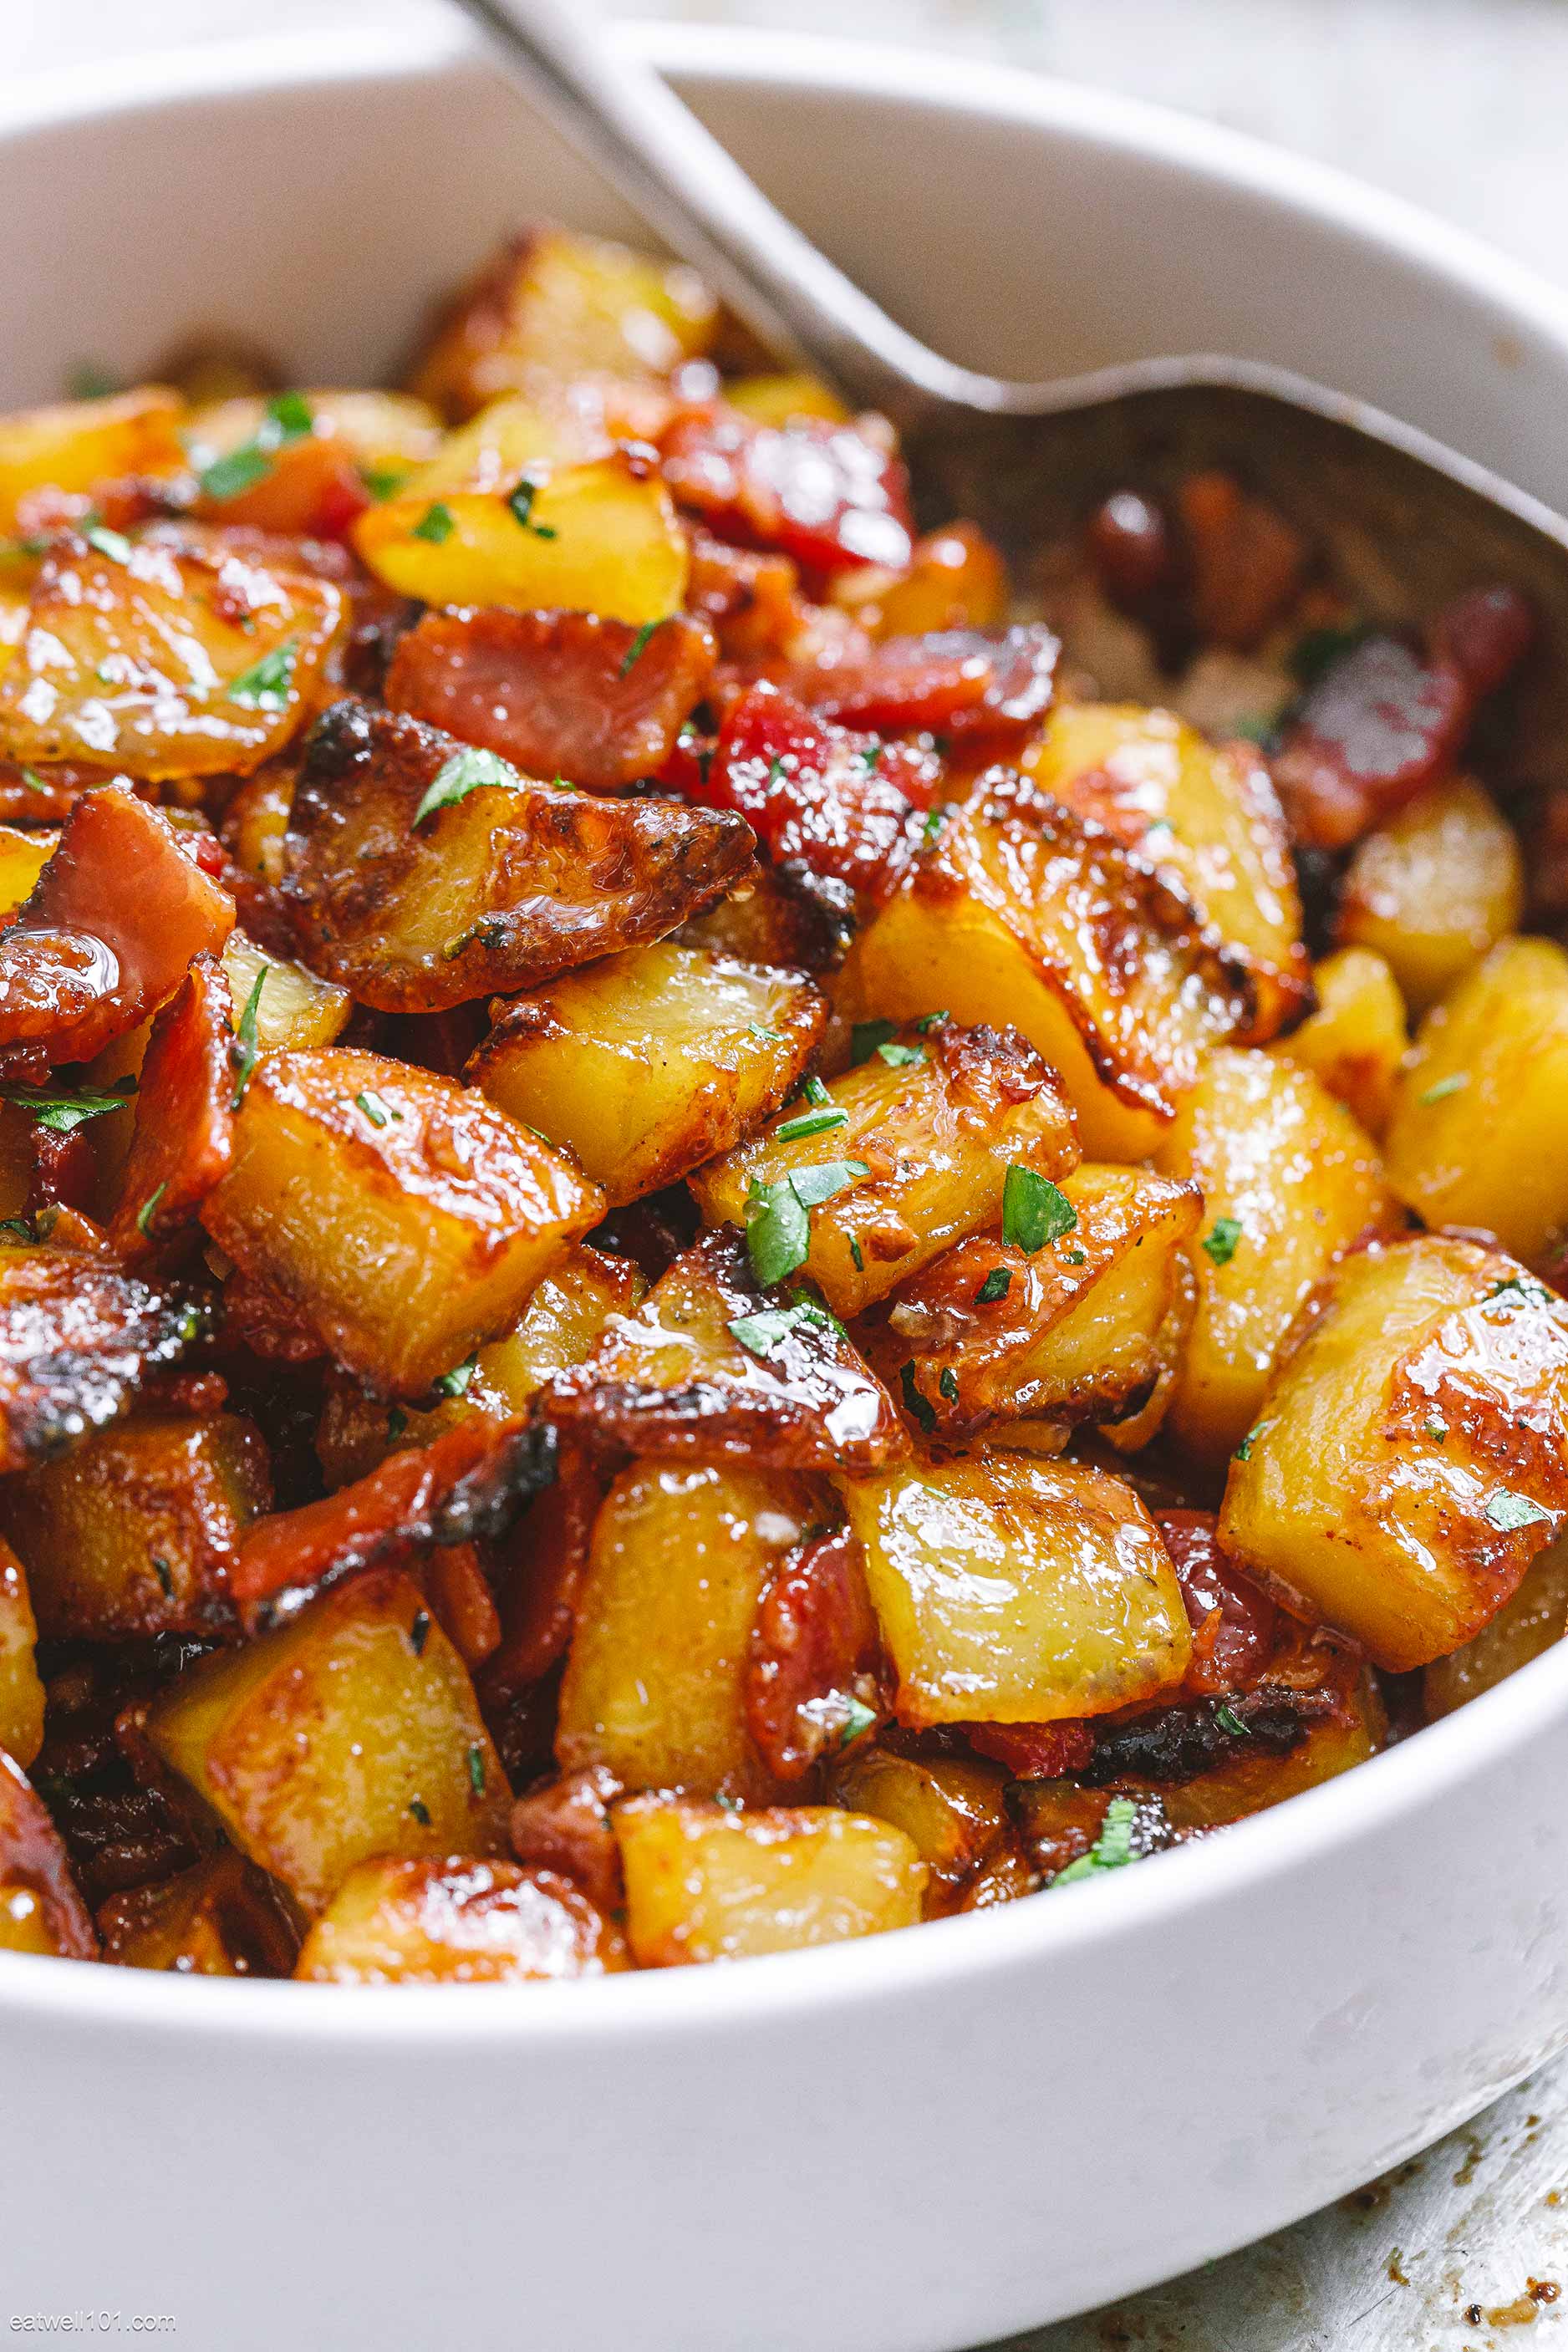 best roasted potatoes